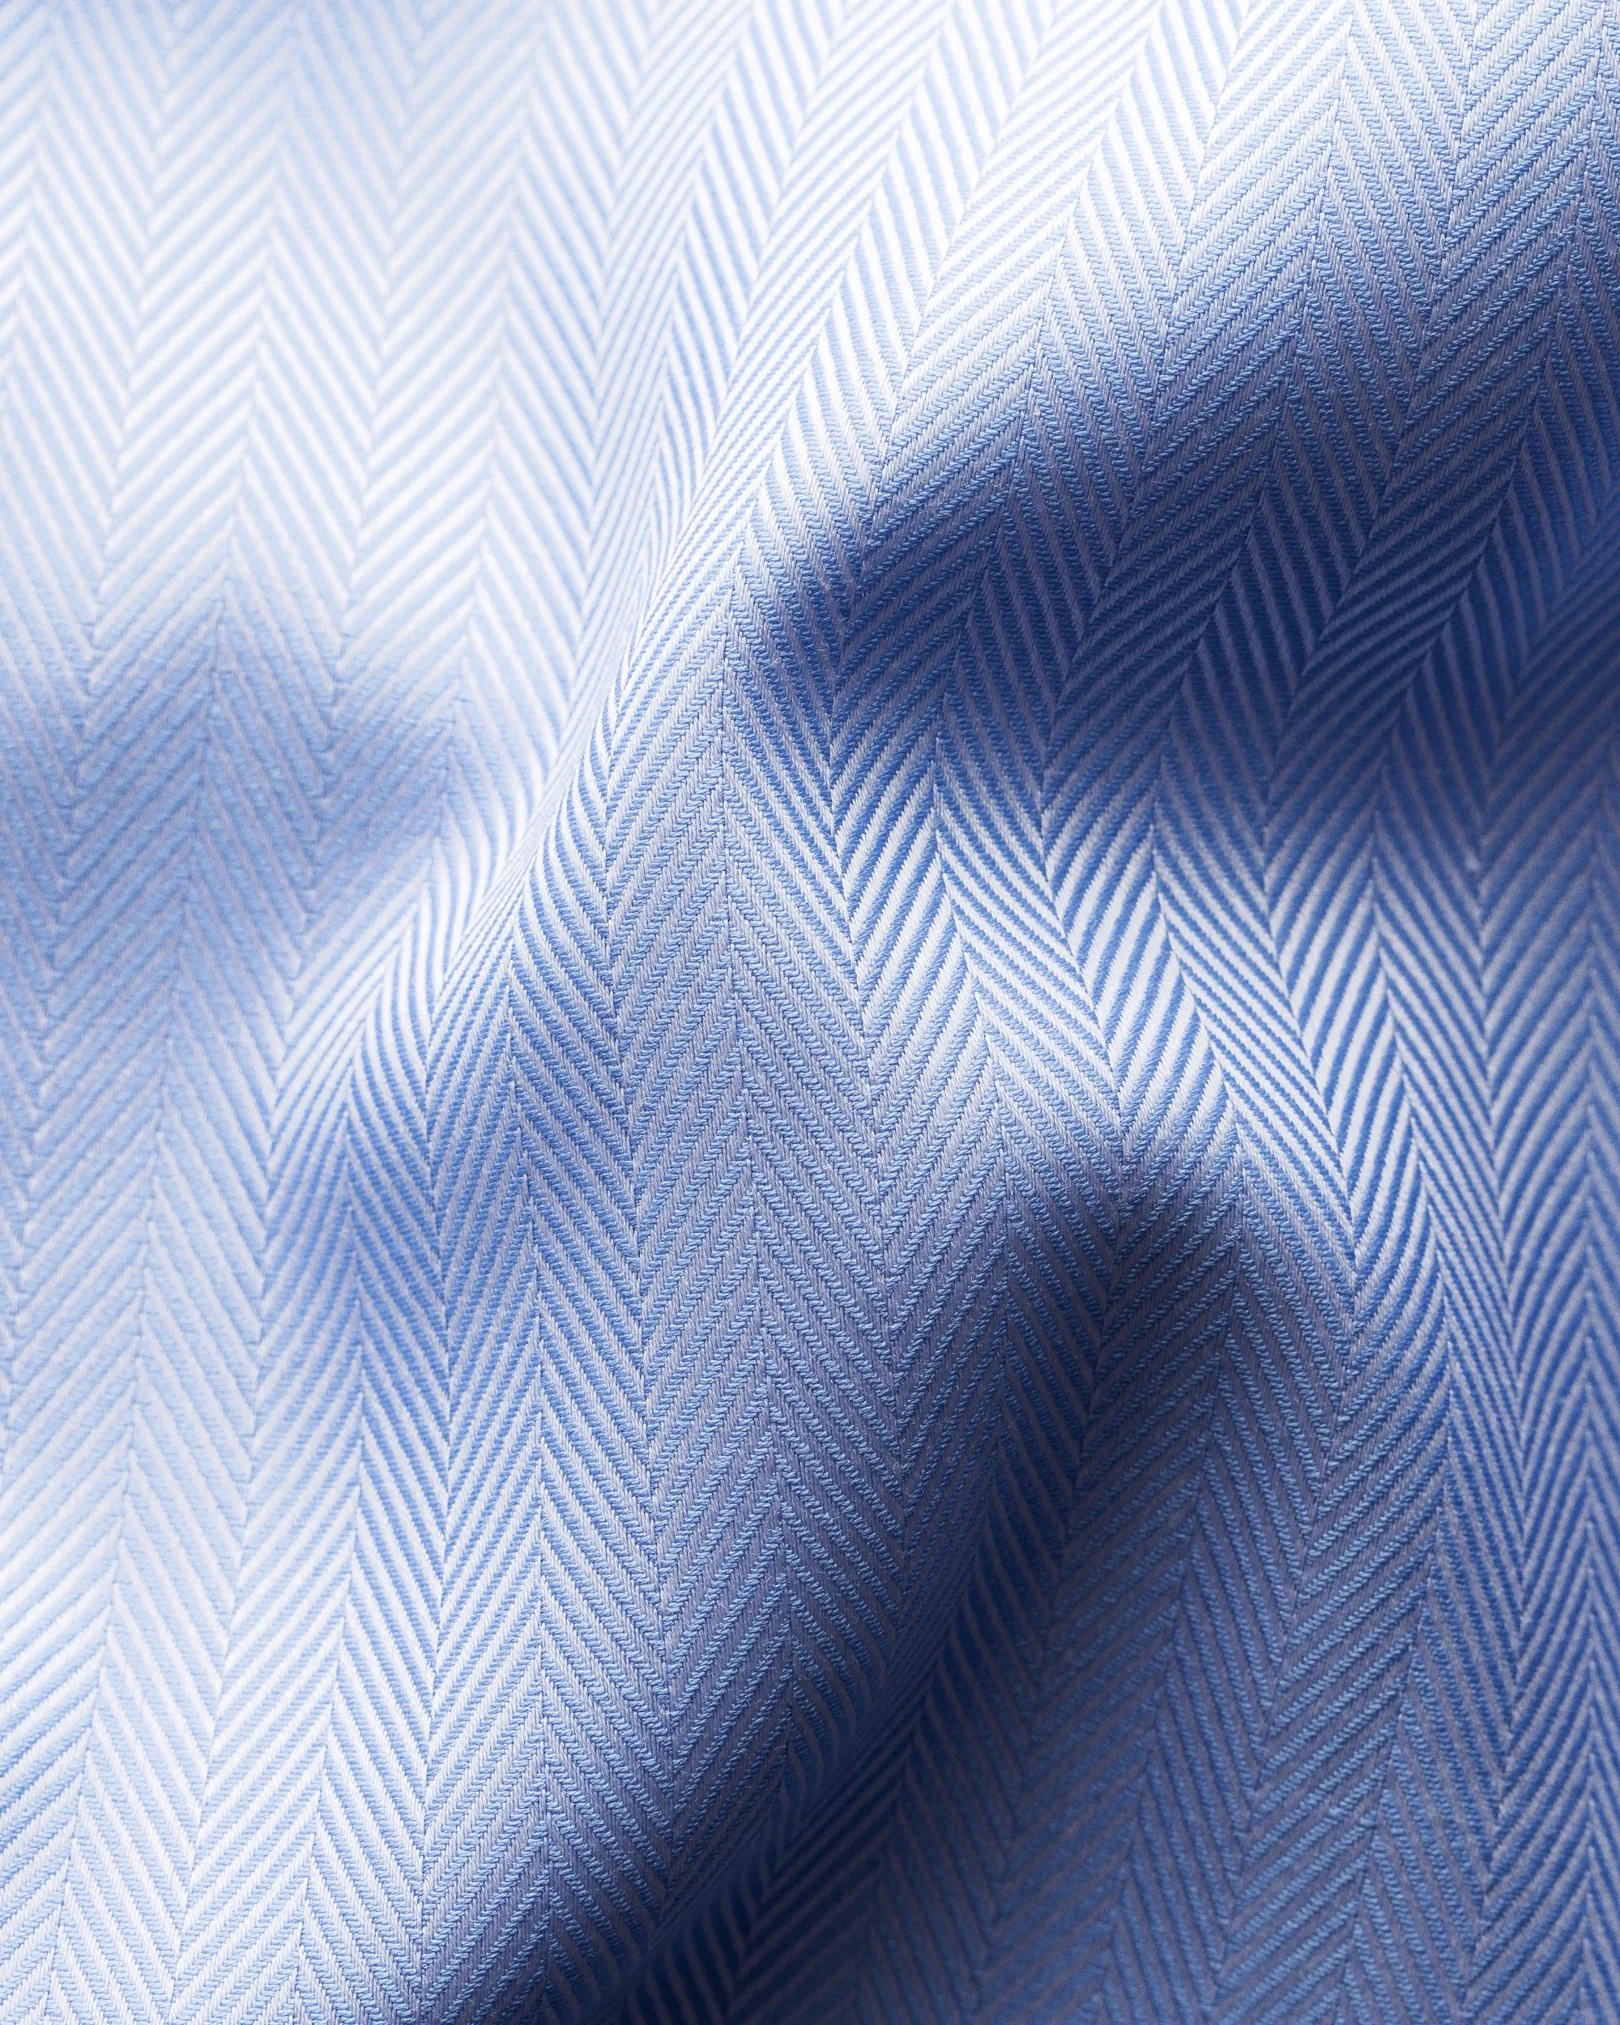 Eton - sky blue herringbone twill shirt